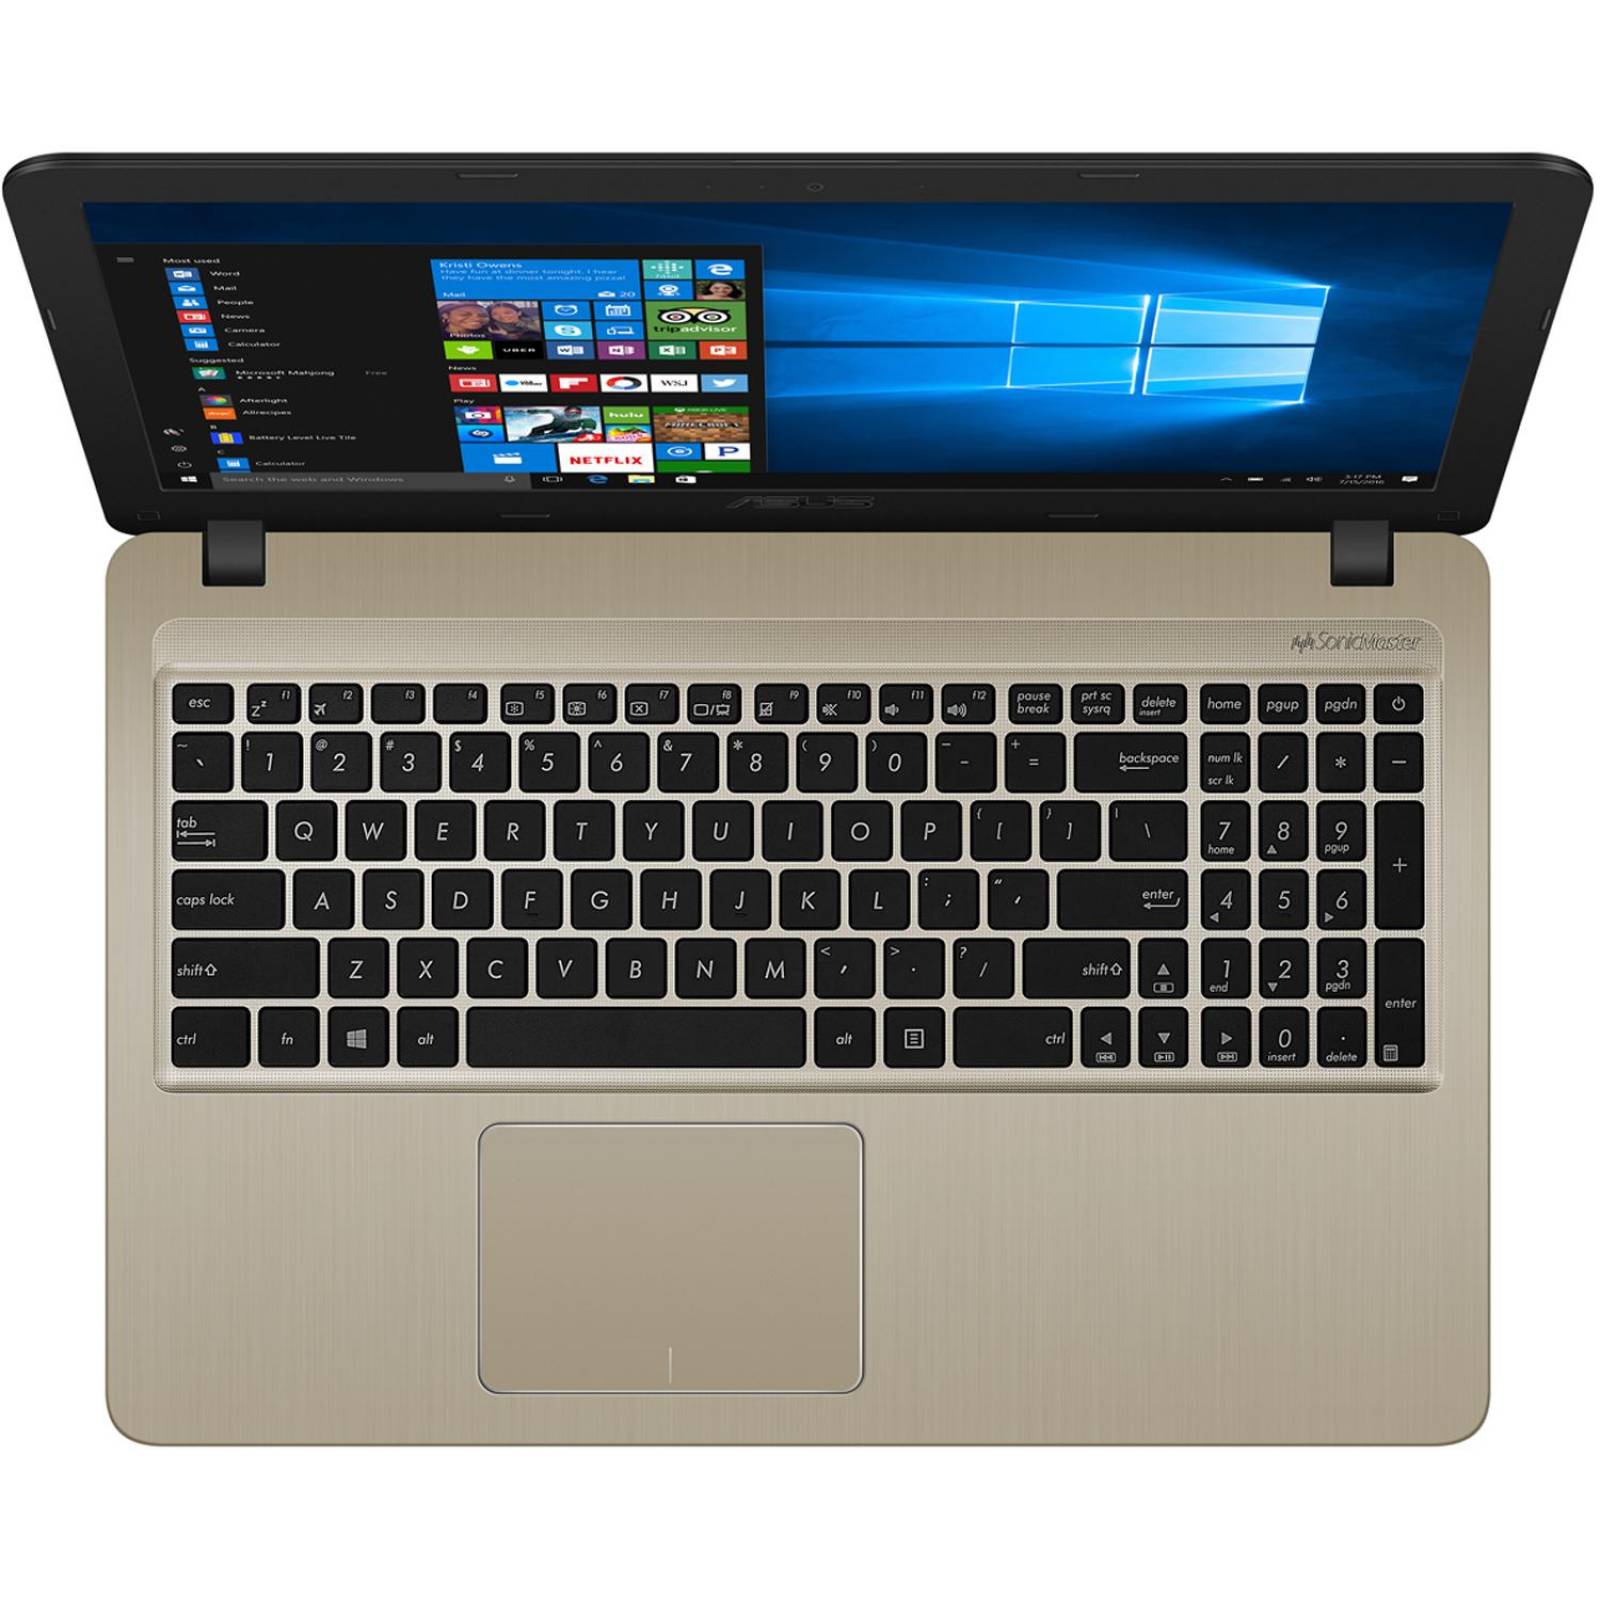 Laptop ASUS Vivobook Intel Dual Core N3350 4GB 500GB Pantalla 15.6 WIFI 